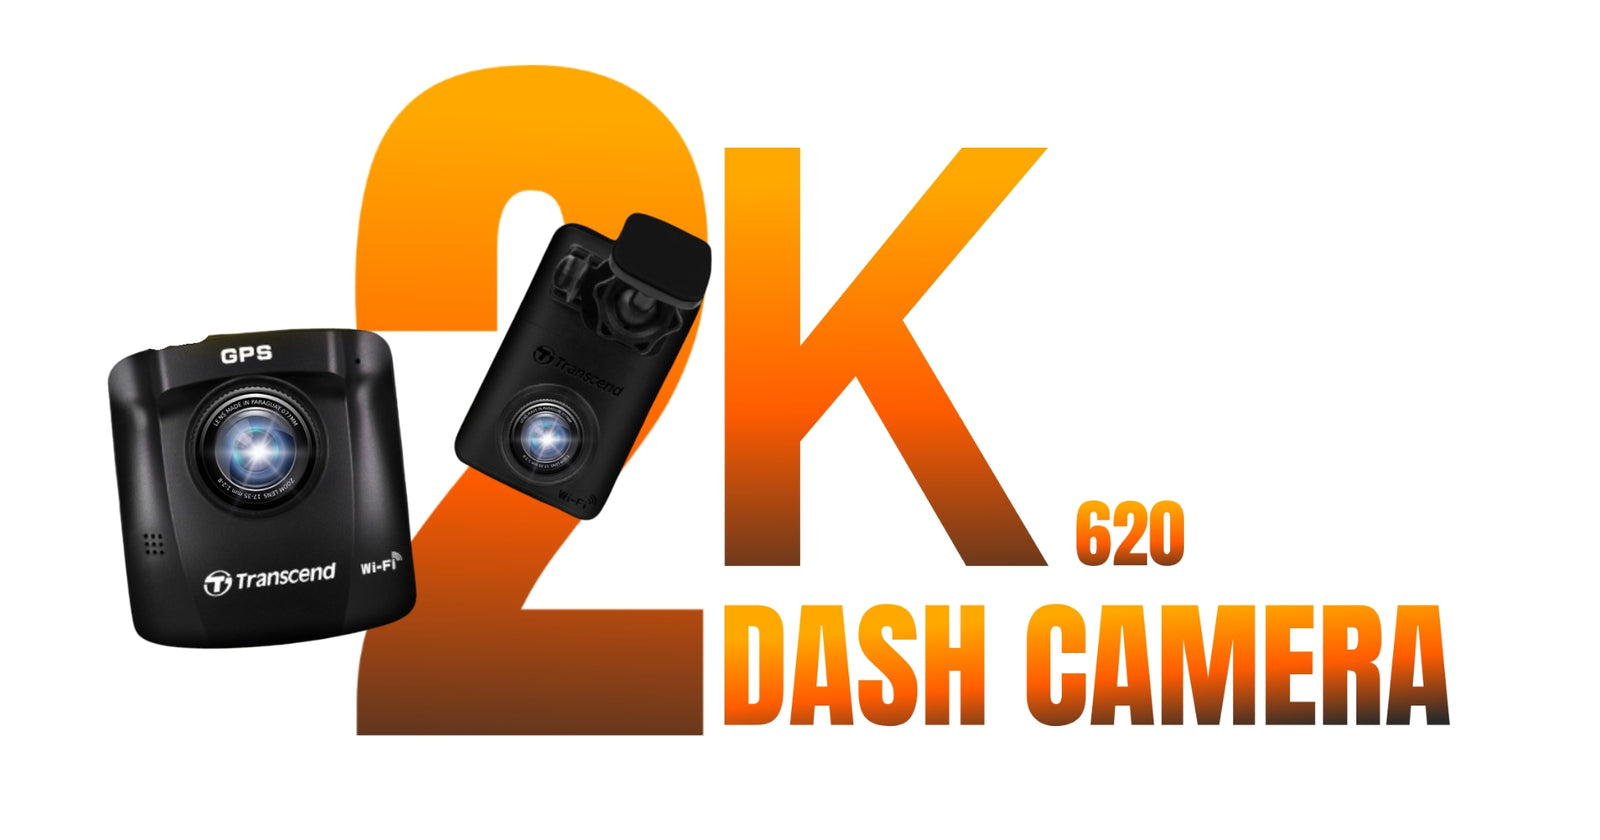 Transcend DP 620 Dash Camera | dash camera